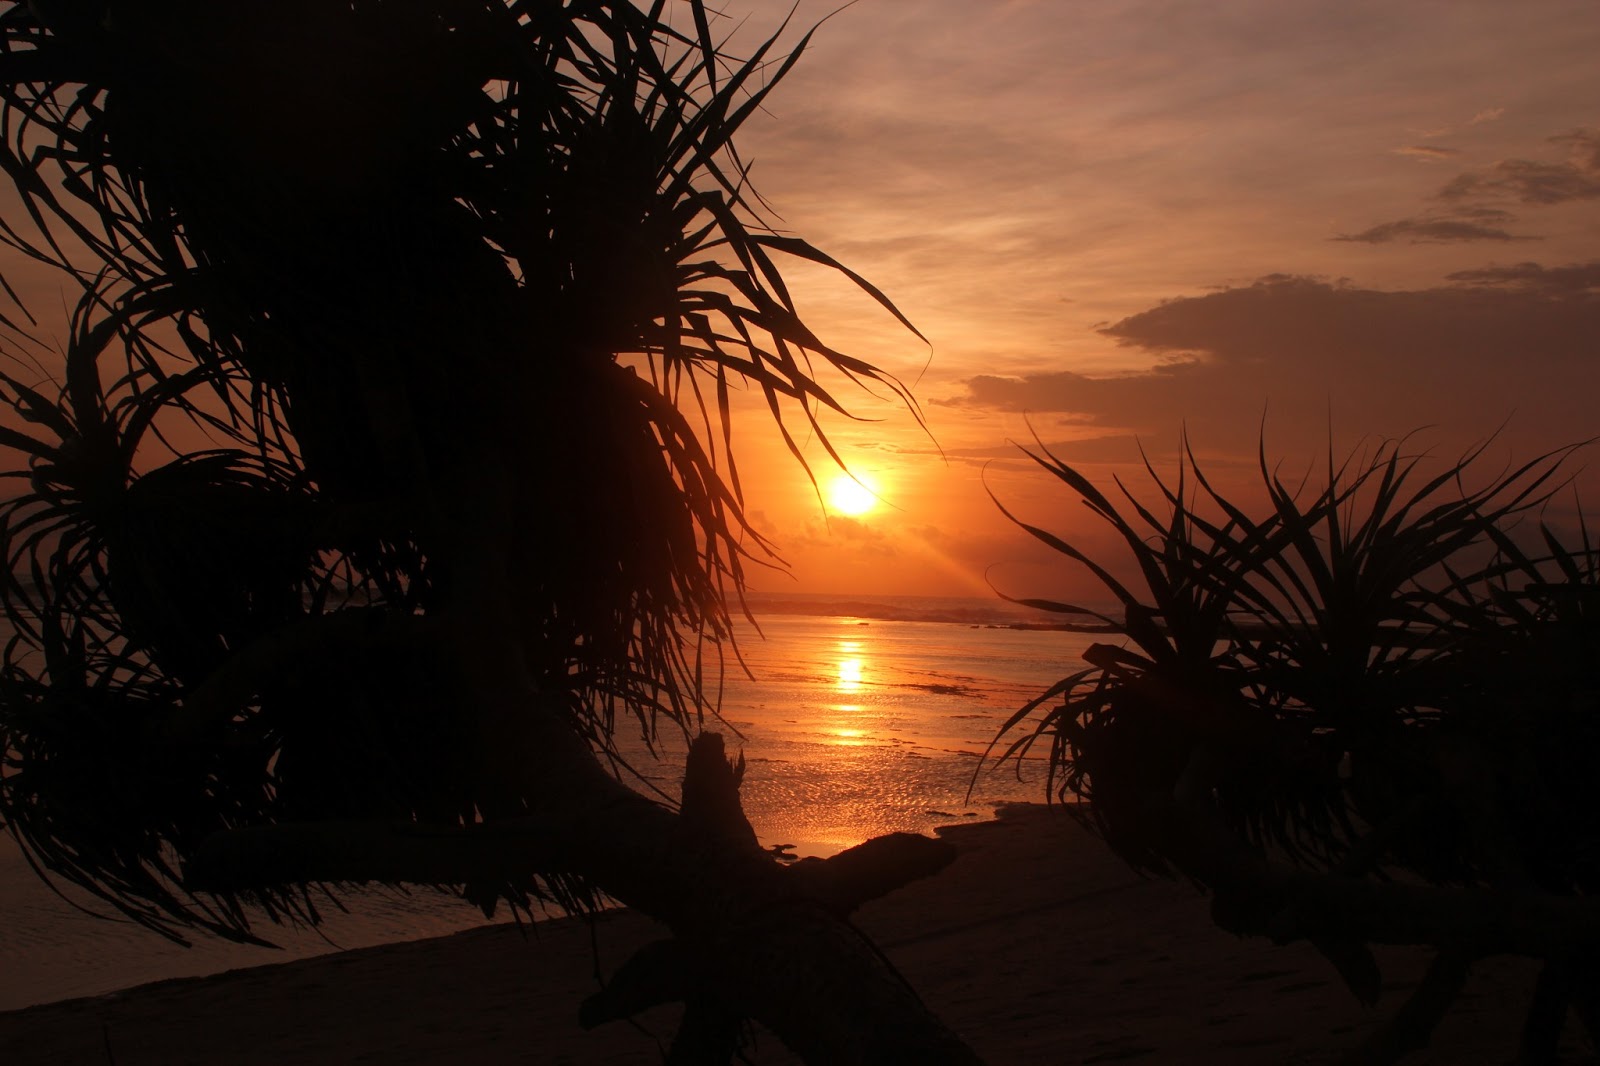 By Aank Amar : Sunset di Pantai Garut Selatan